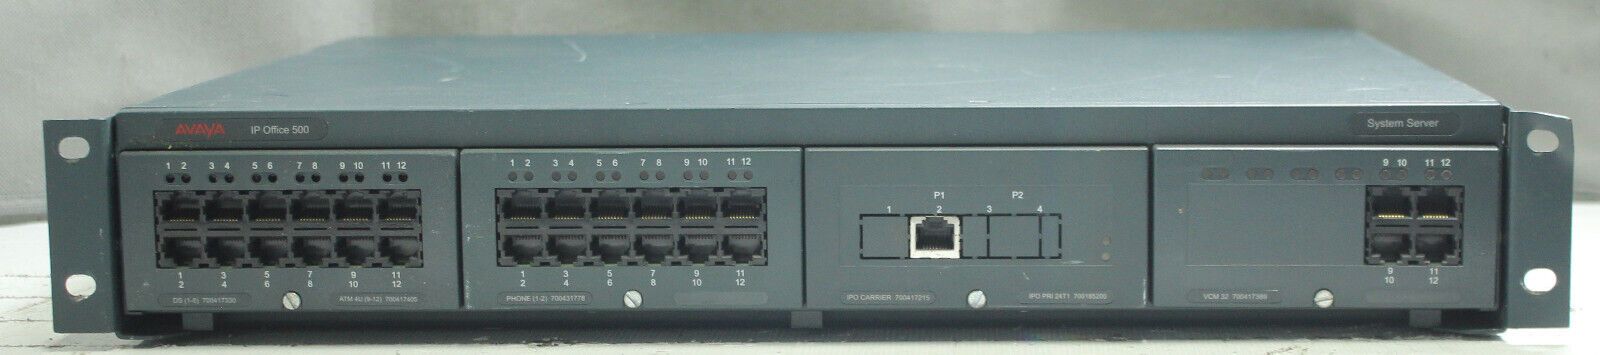 Avaya IPO IP500 Control Unit PCS10 700417207 System Server With Modules